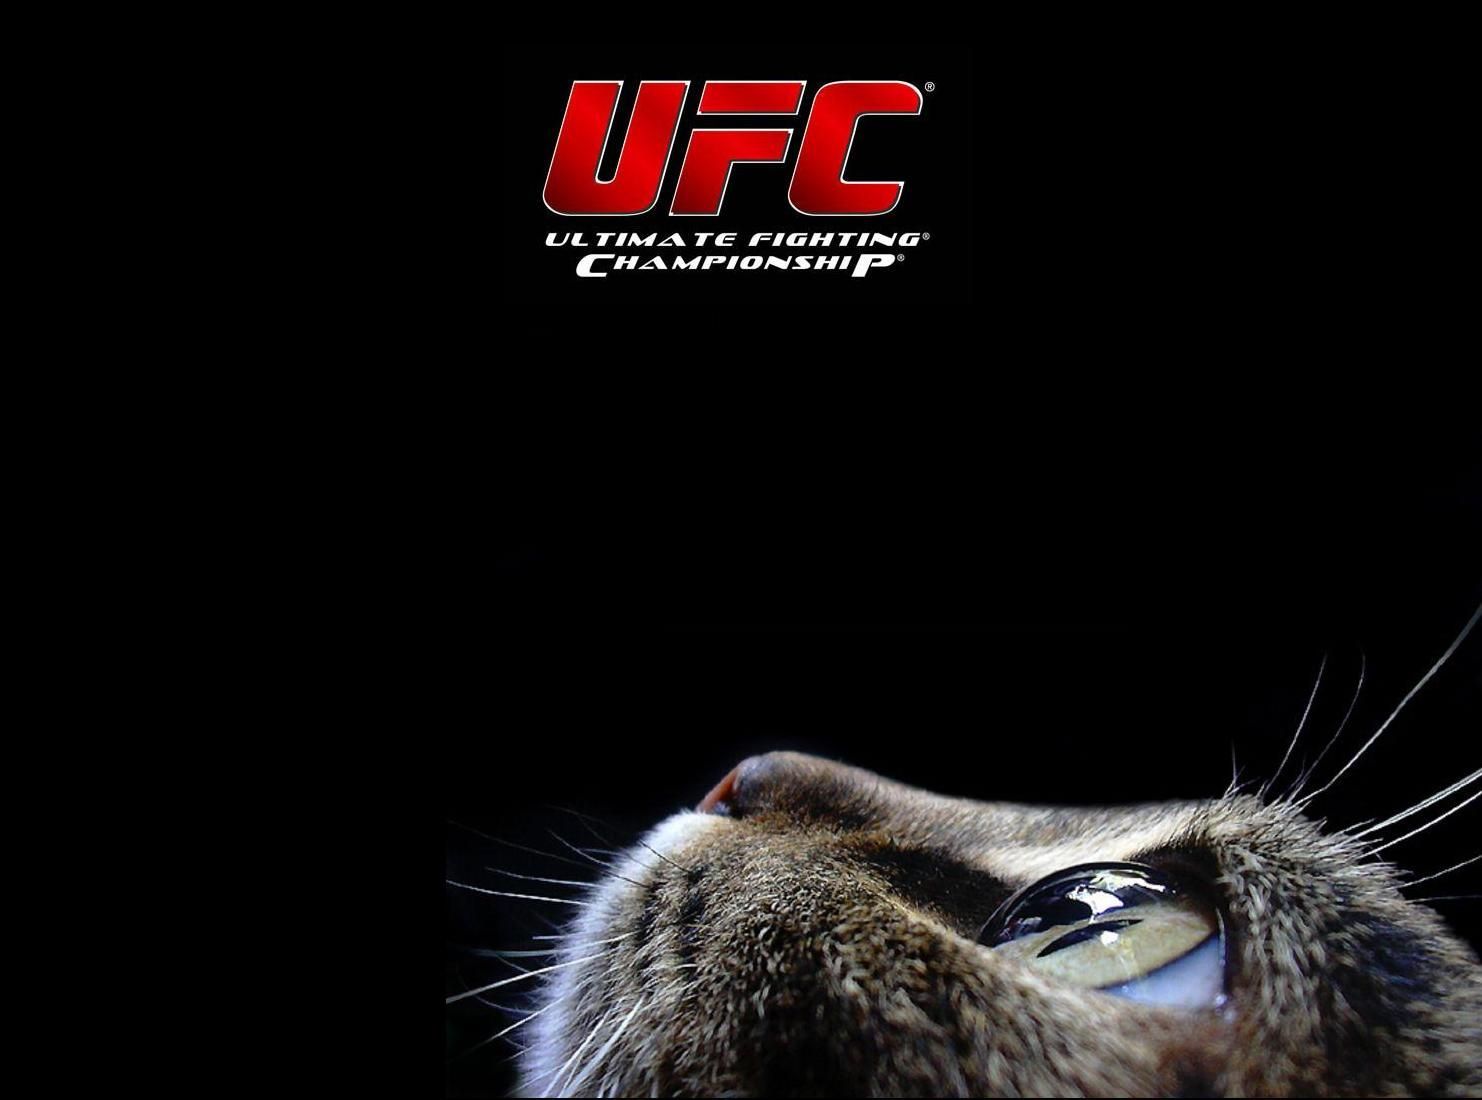 UFC Desktop Full HD Pictures